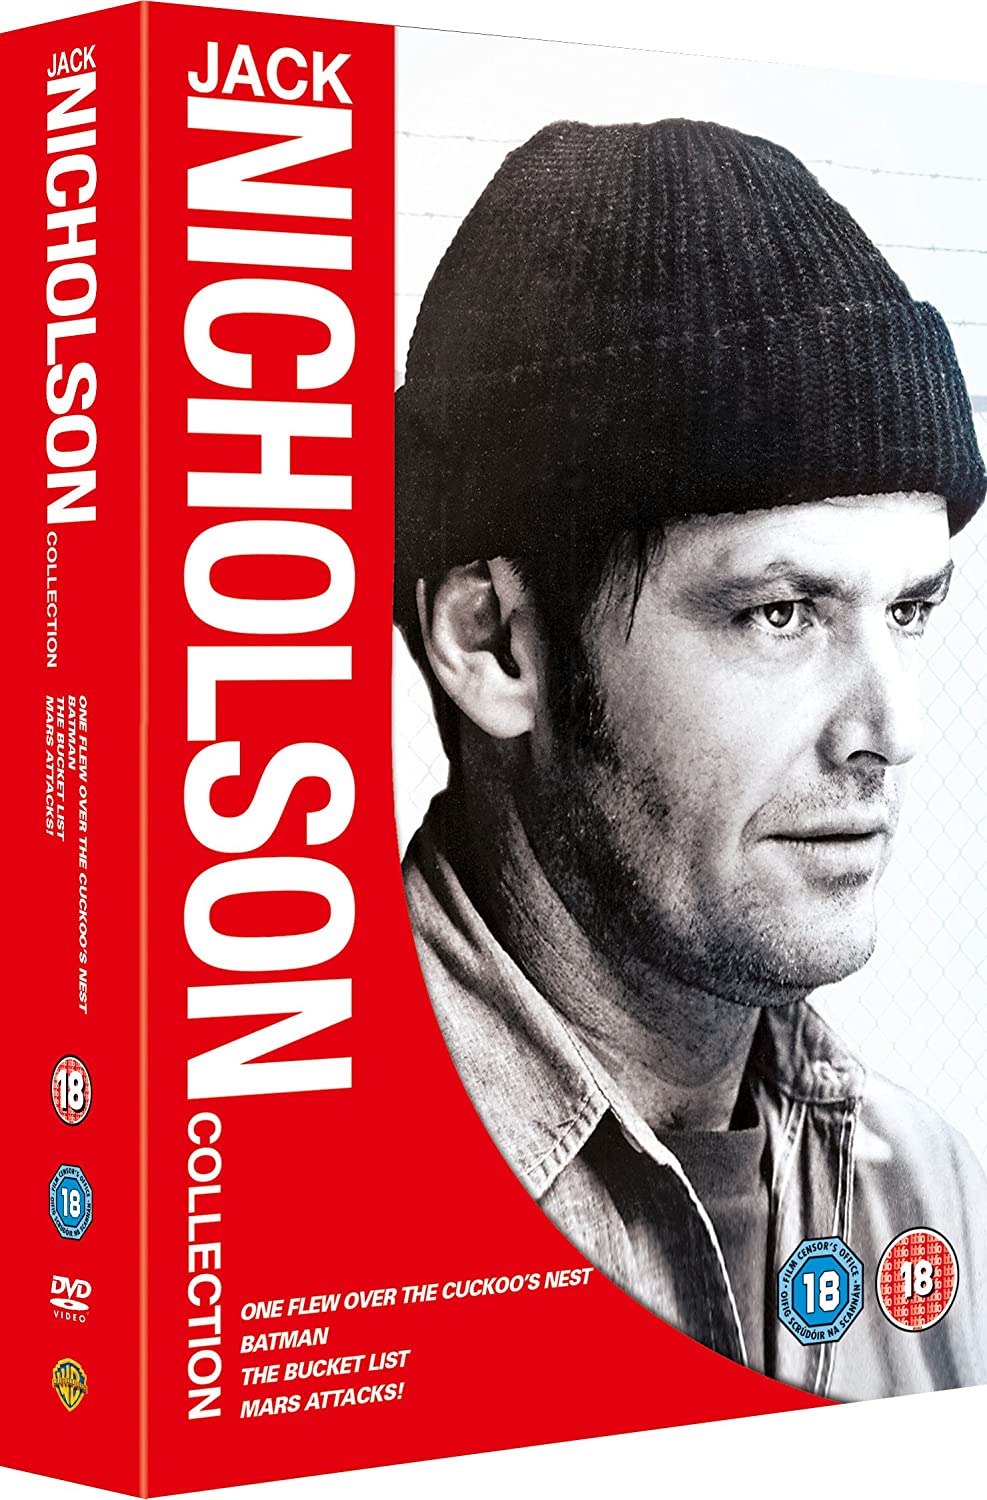 Jack Nicholson Collection [One Flew Over The Cuckoo's Nest, Batman, Bucket List, Mars Attacks] - Drama [DVD]